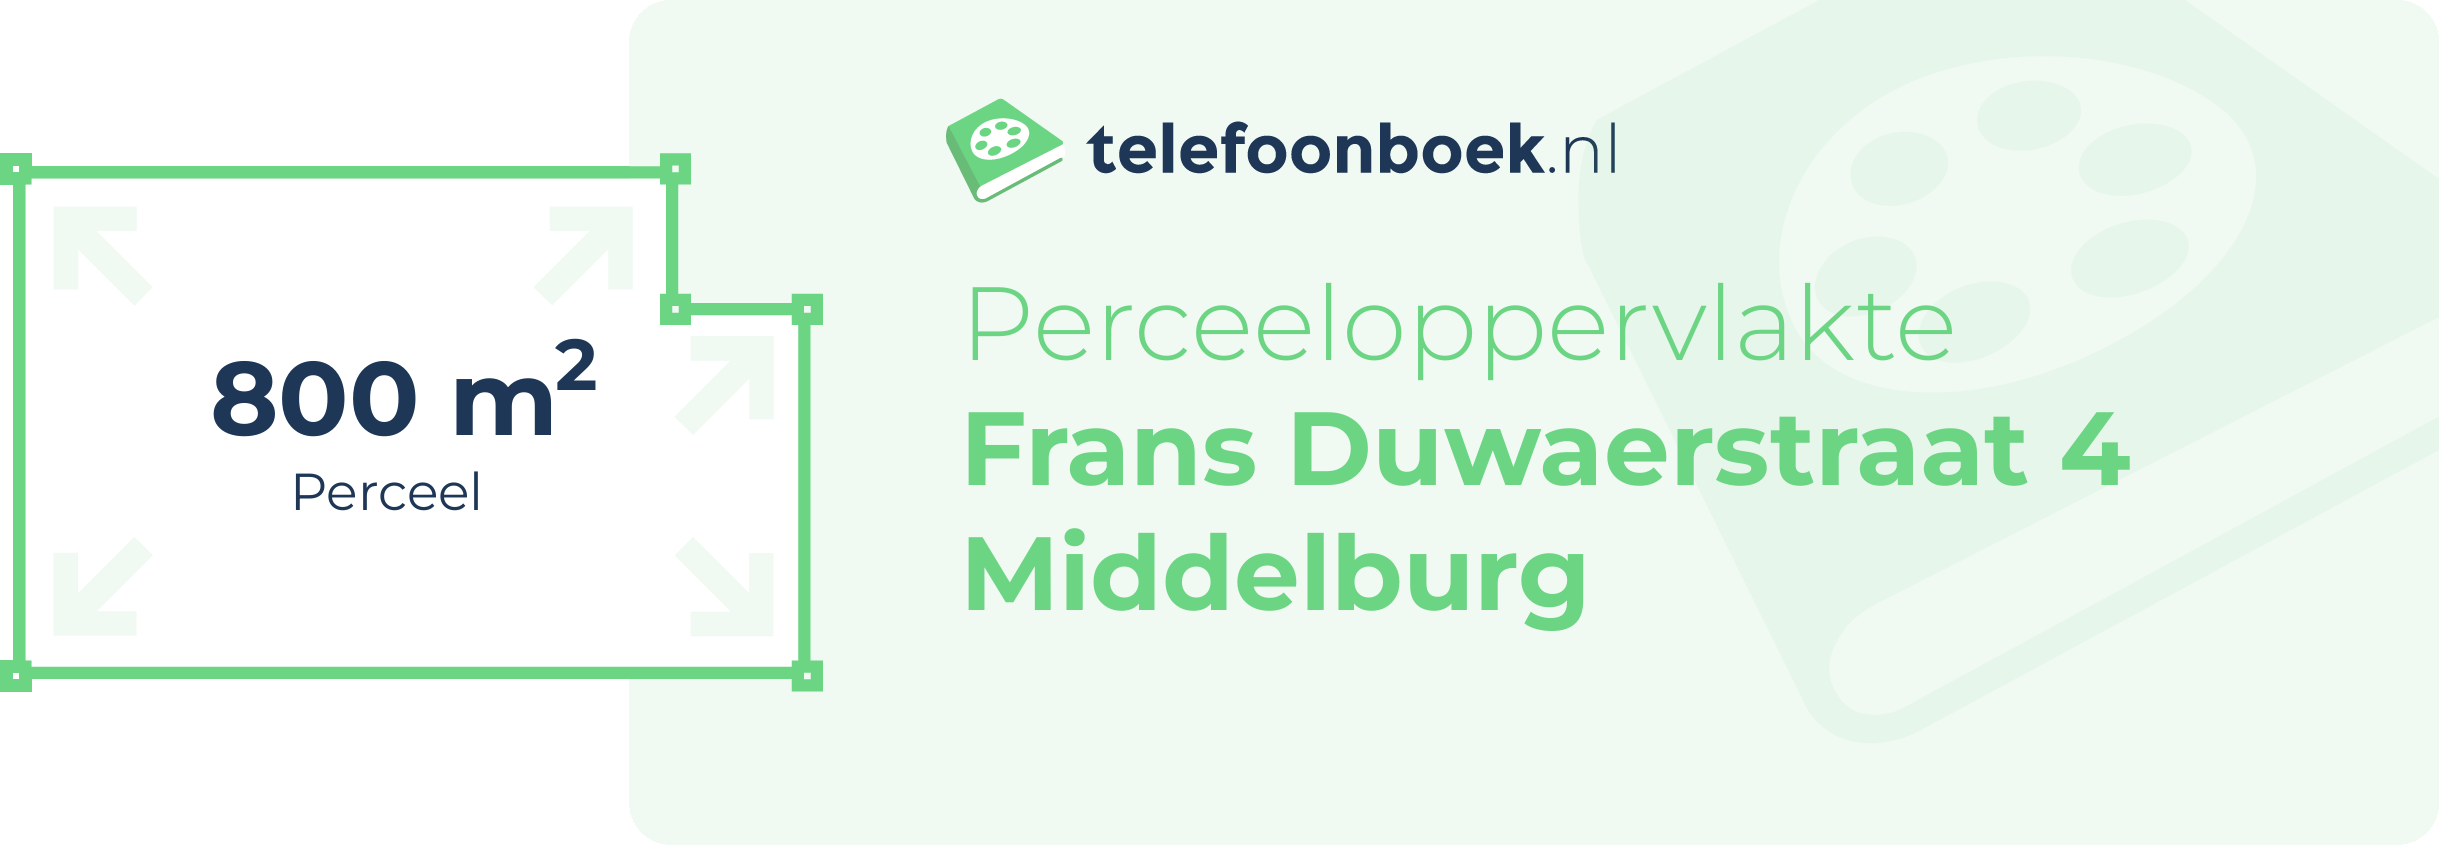 Perceeloppervlakte Frans Duwaerstraat 4 Middelburg